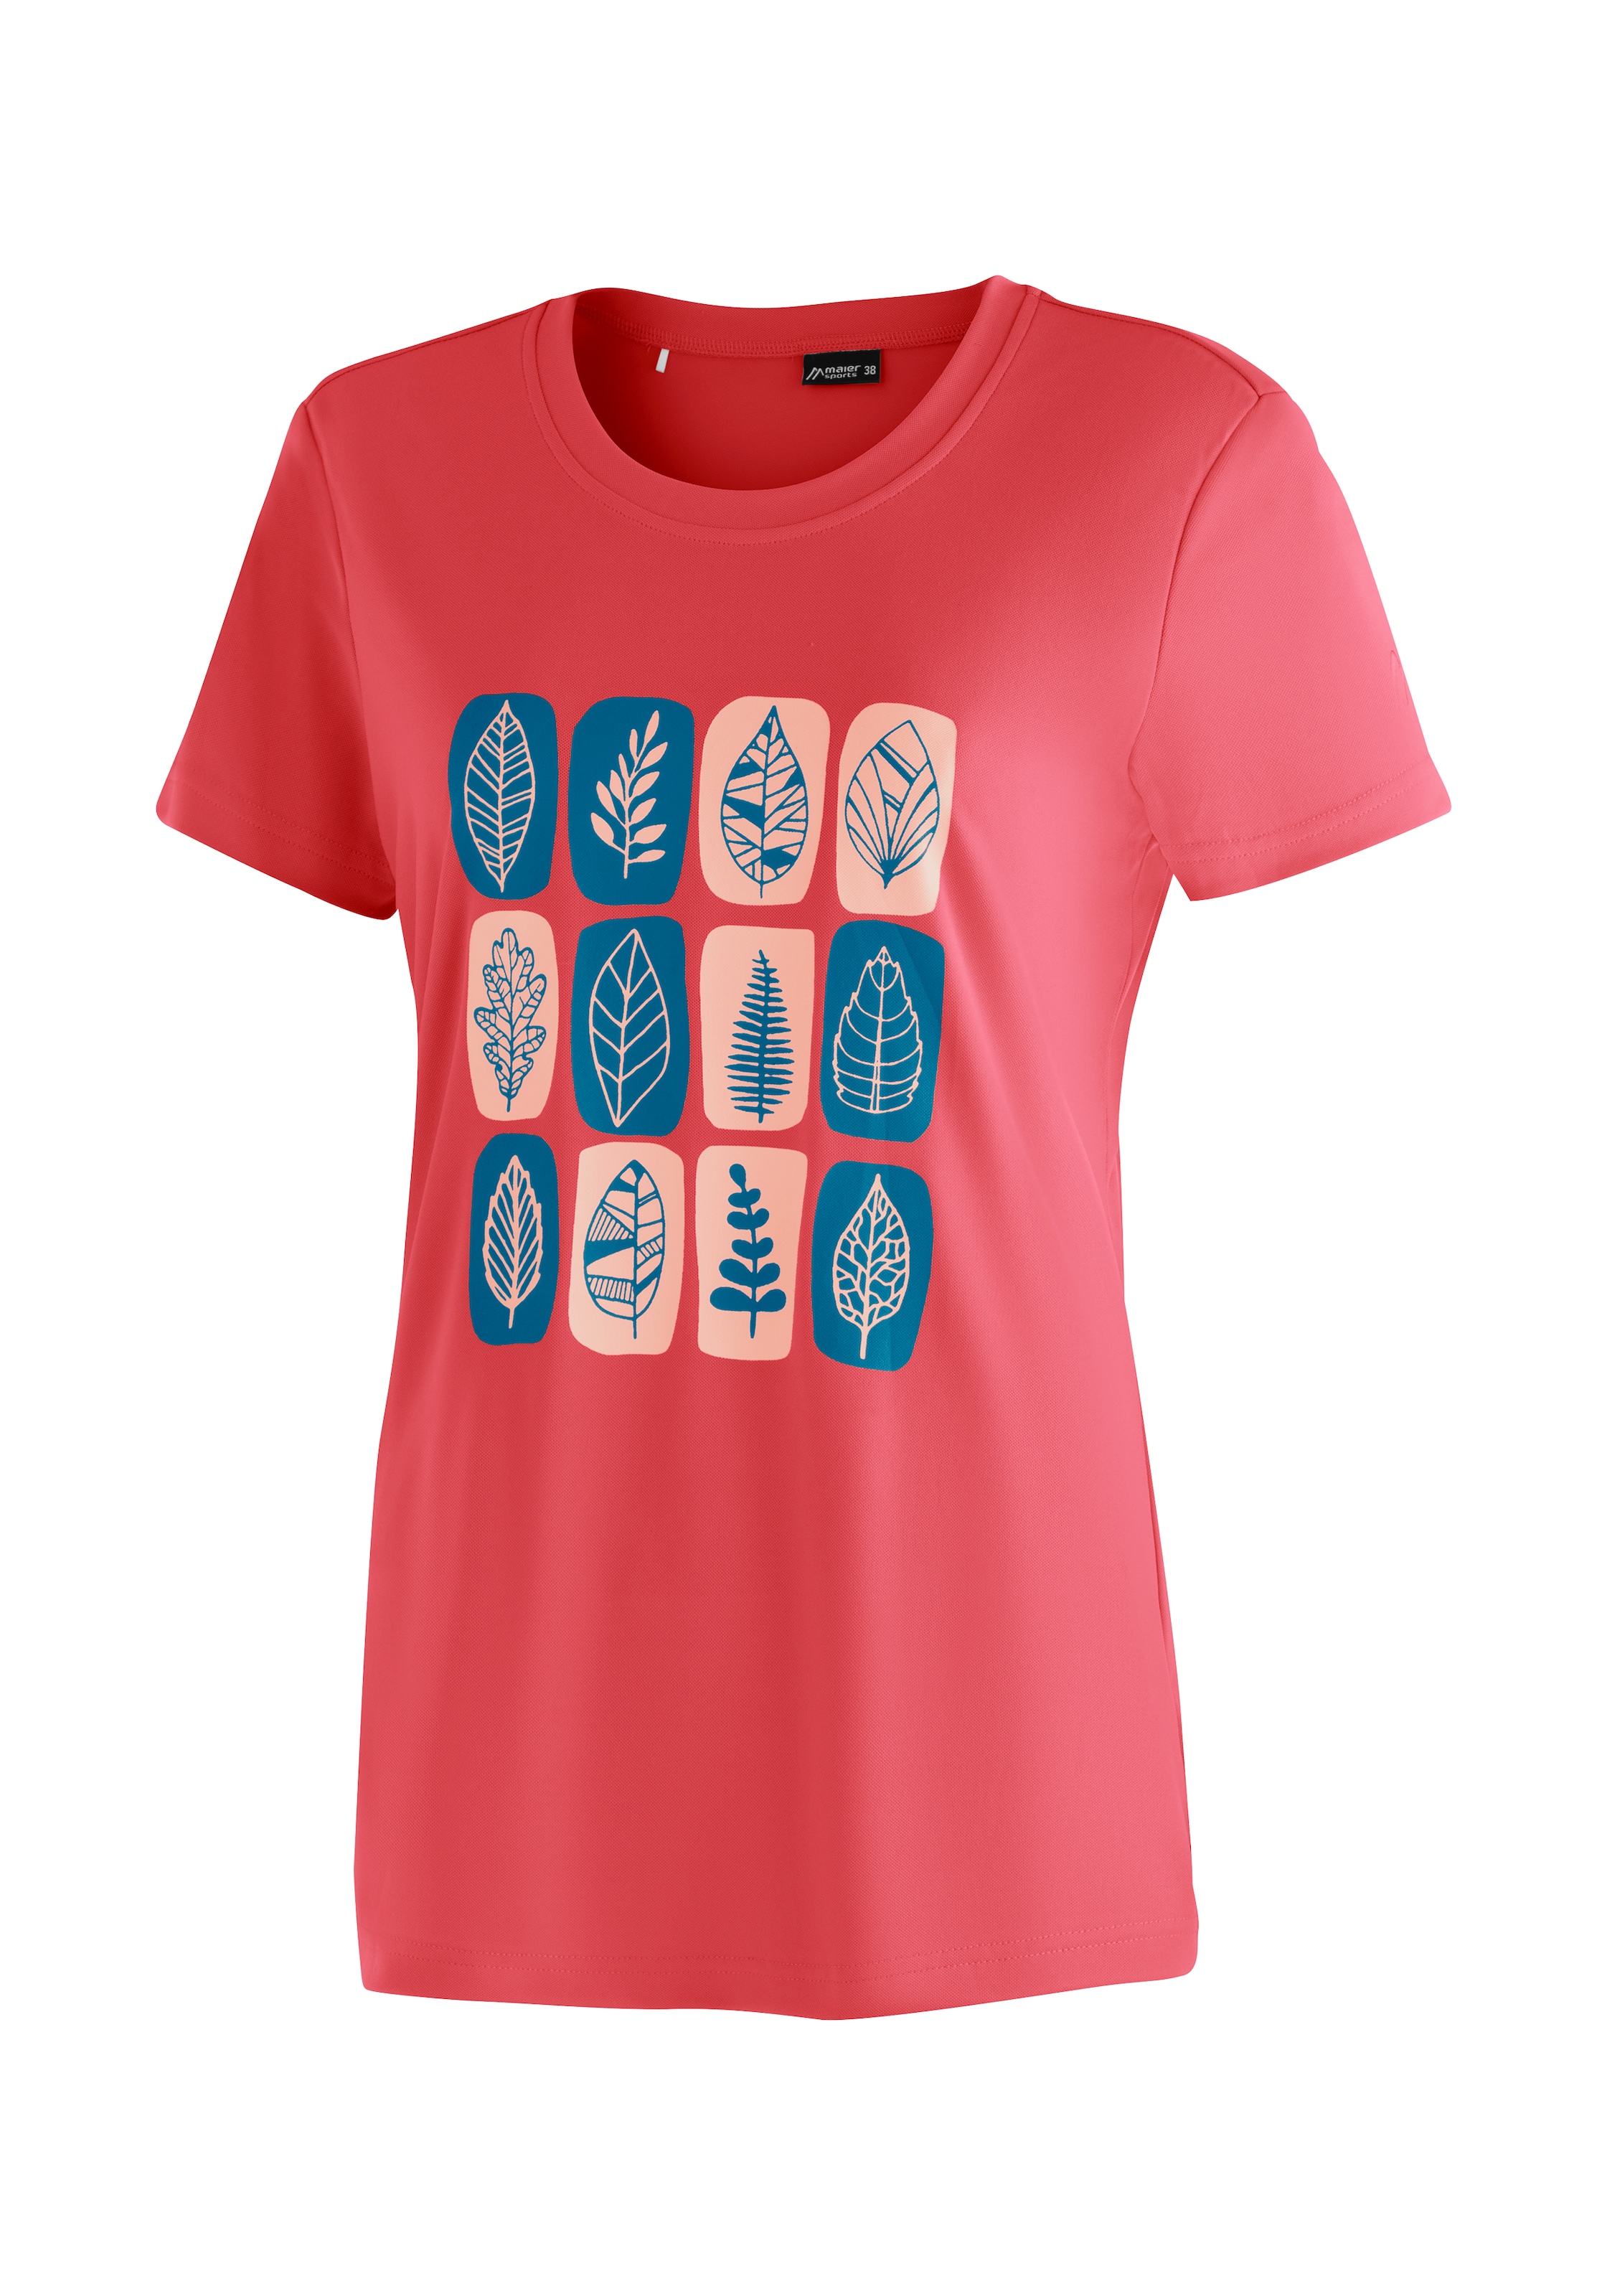 T-Shirt Funktional Maier Print«, hoher mit Passformstabilität Sports »Waltraut Funktionsshirt shoppen vielseitiges